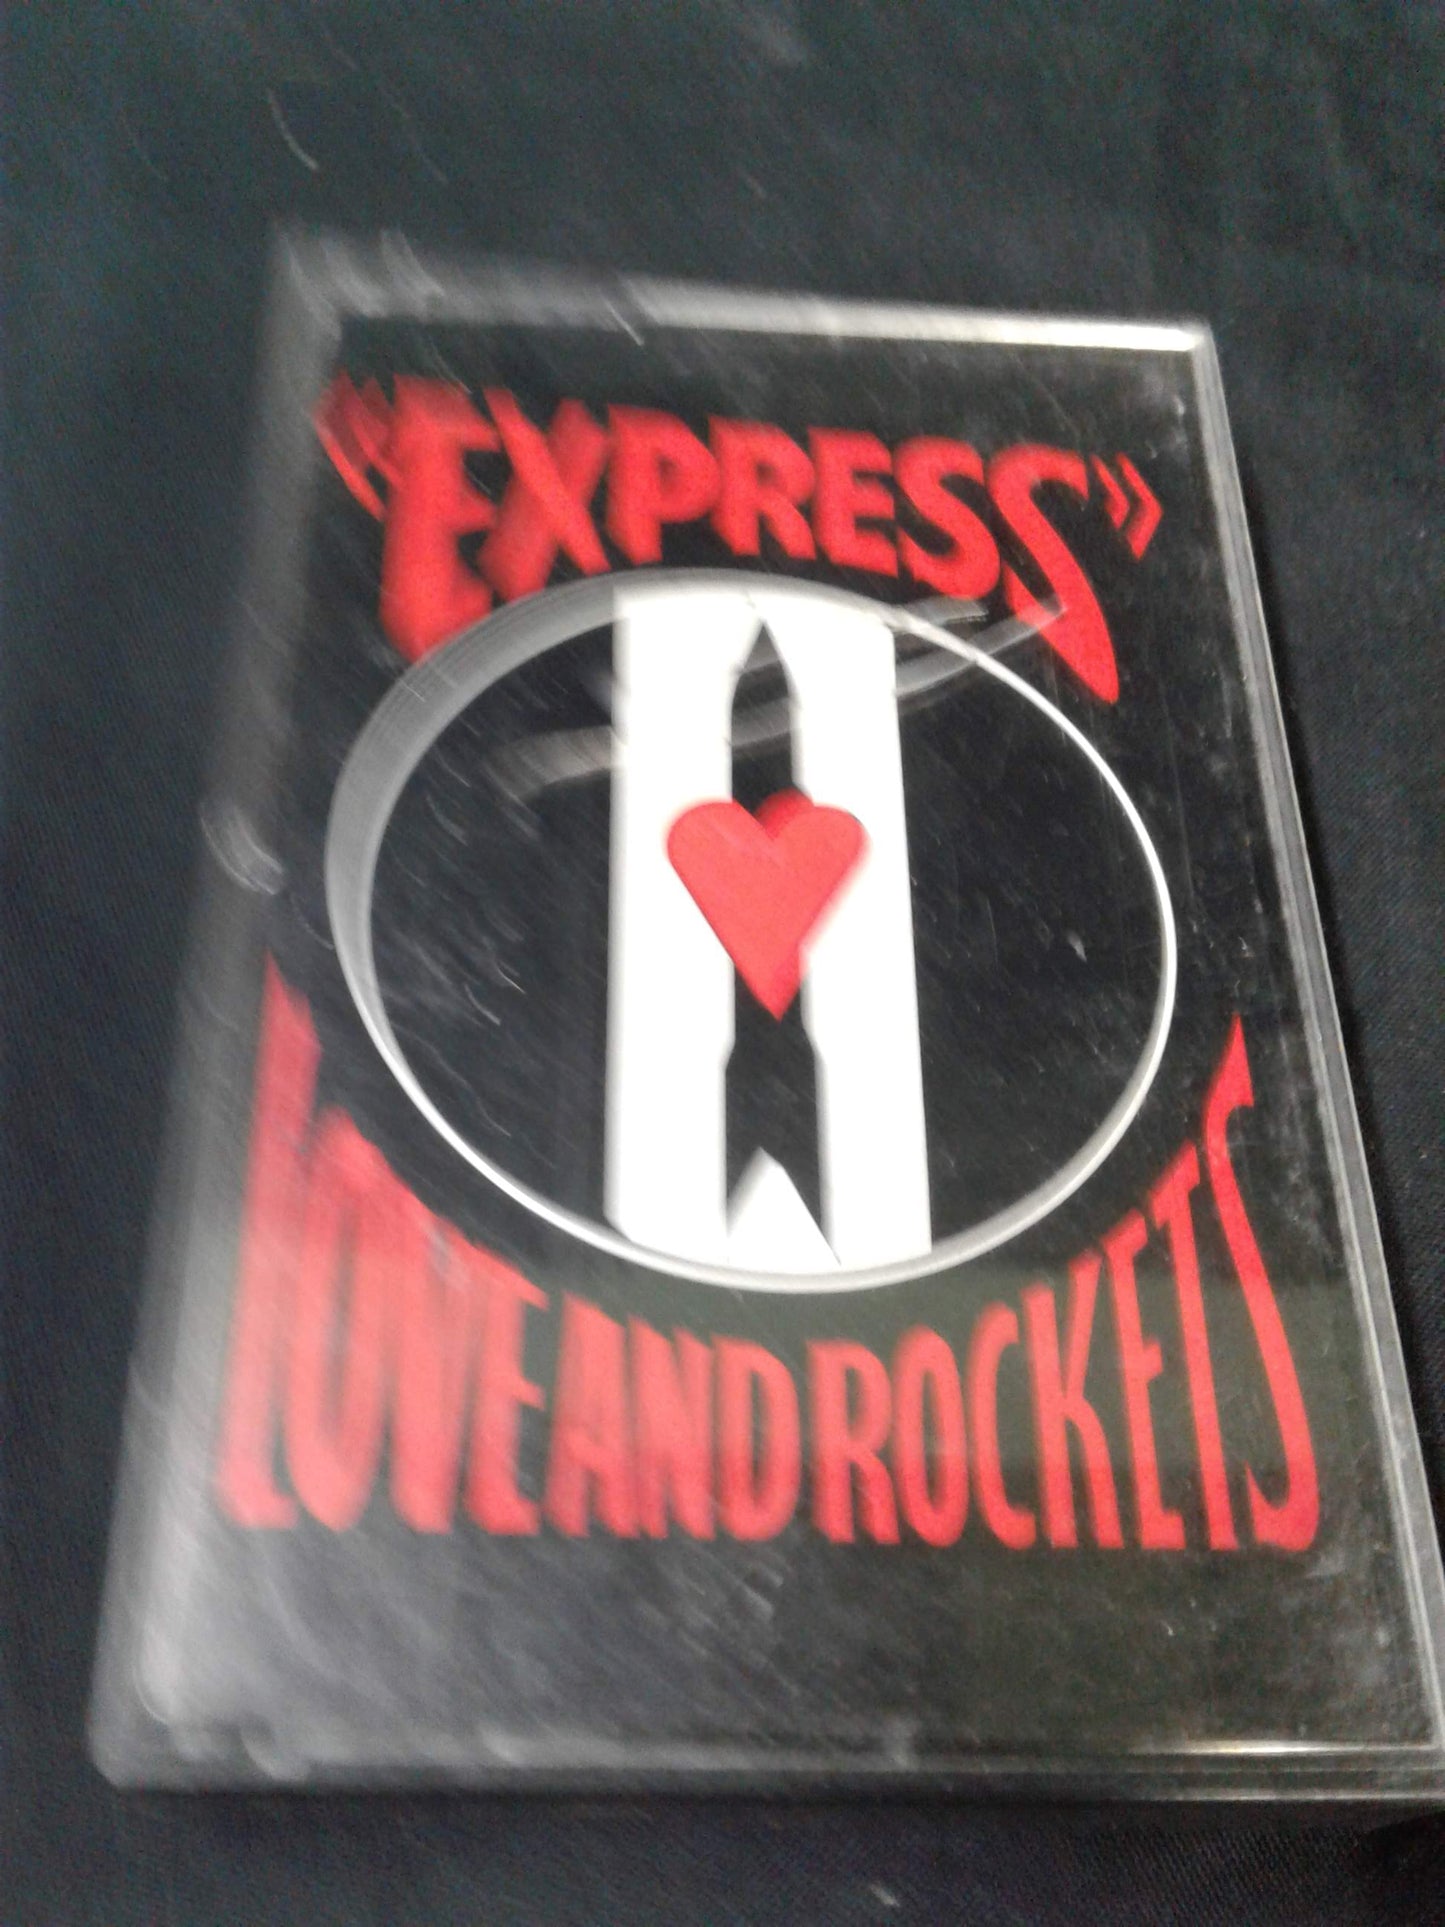 Cassette Express Love and rockets